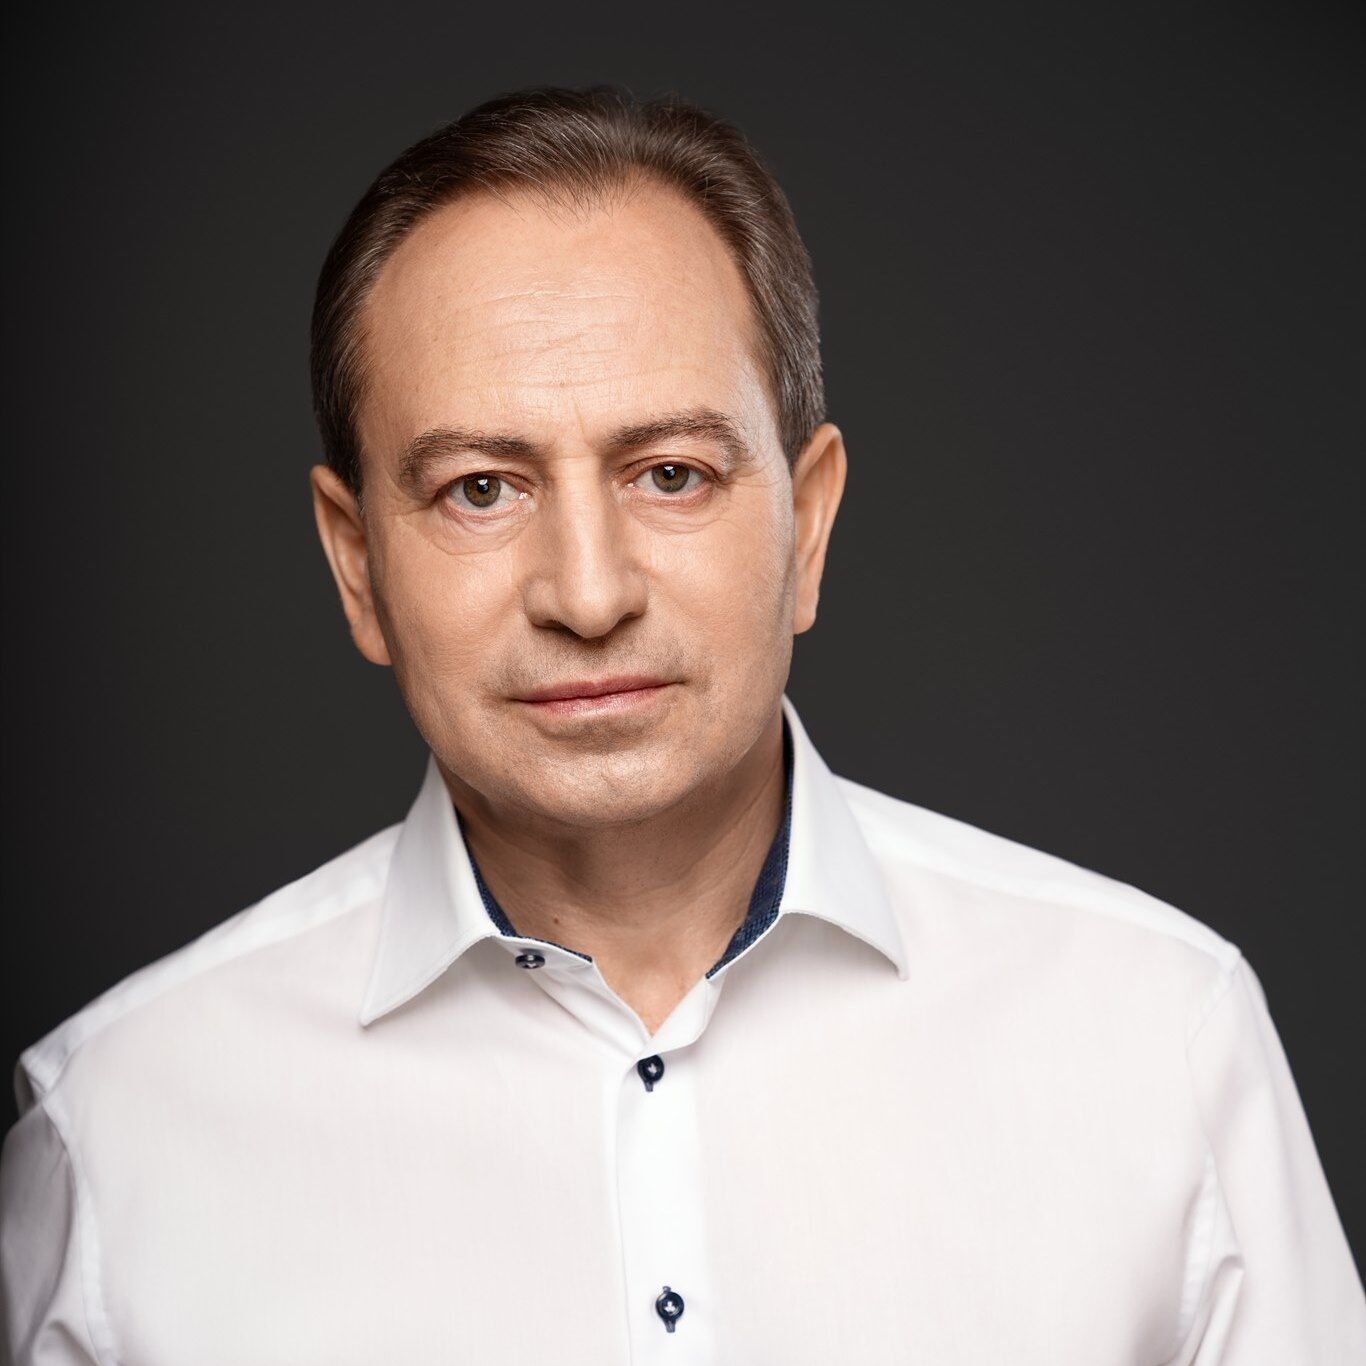 Николай Томенко в 2016 году был лишен мандата народного депутата